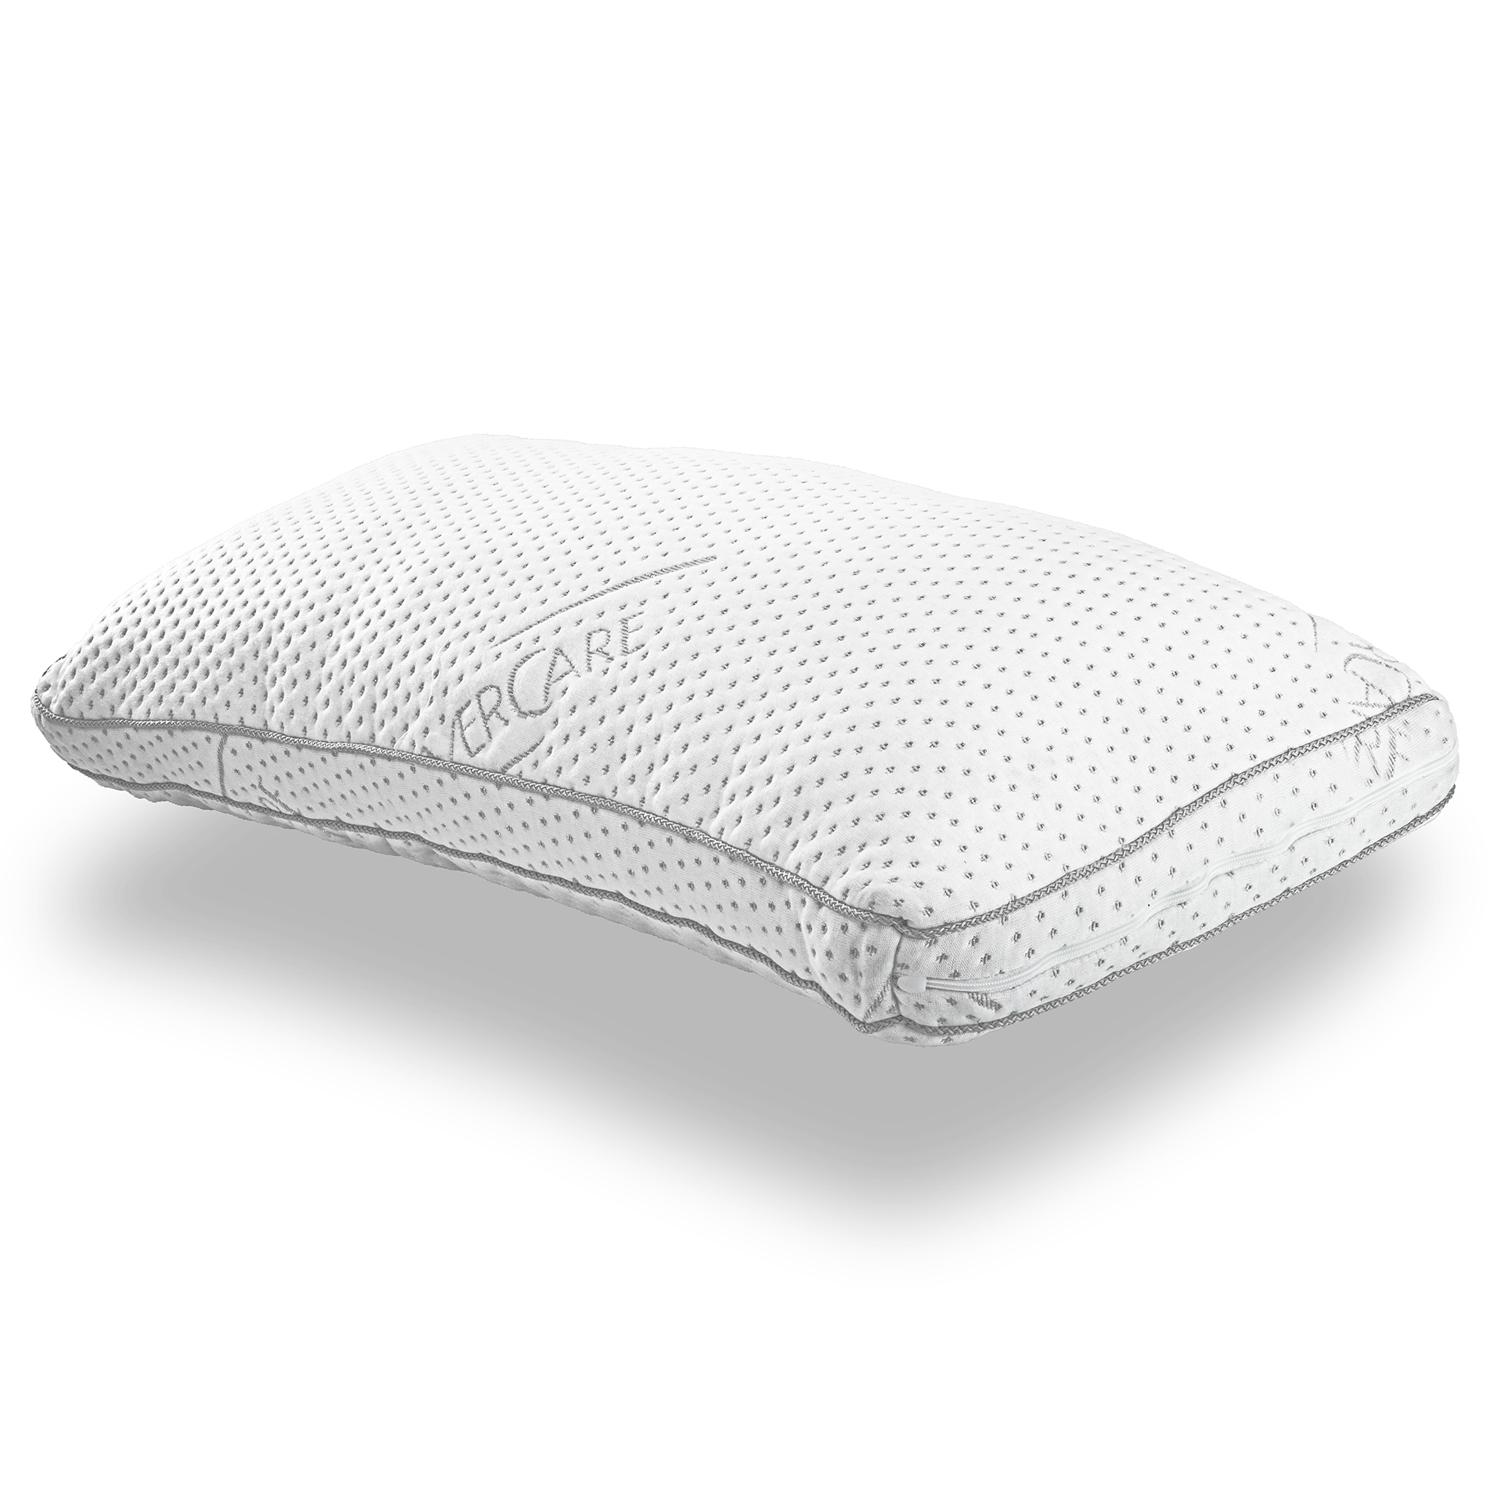 Supportho viscoelastic comfort sleeping pillow 40 x 80 cm